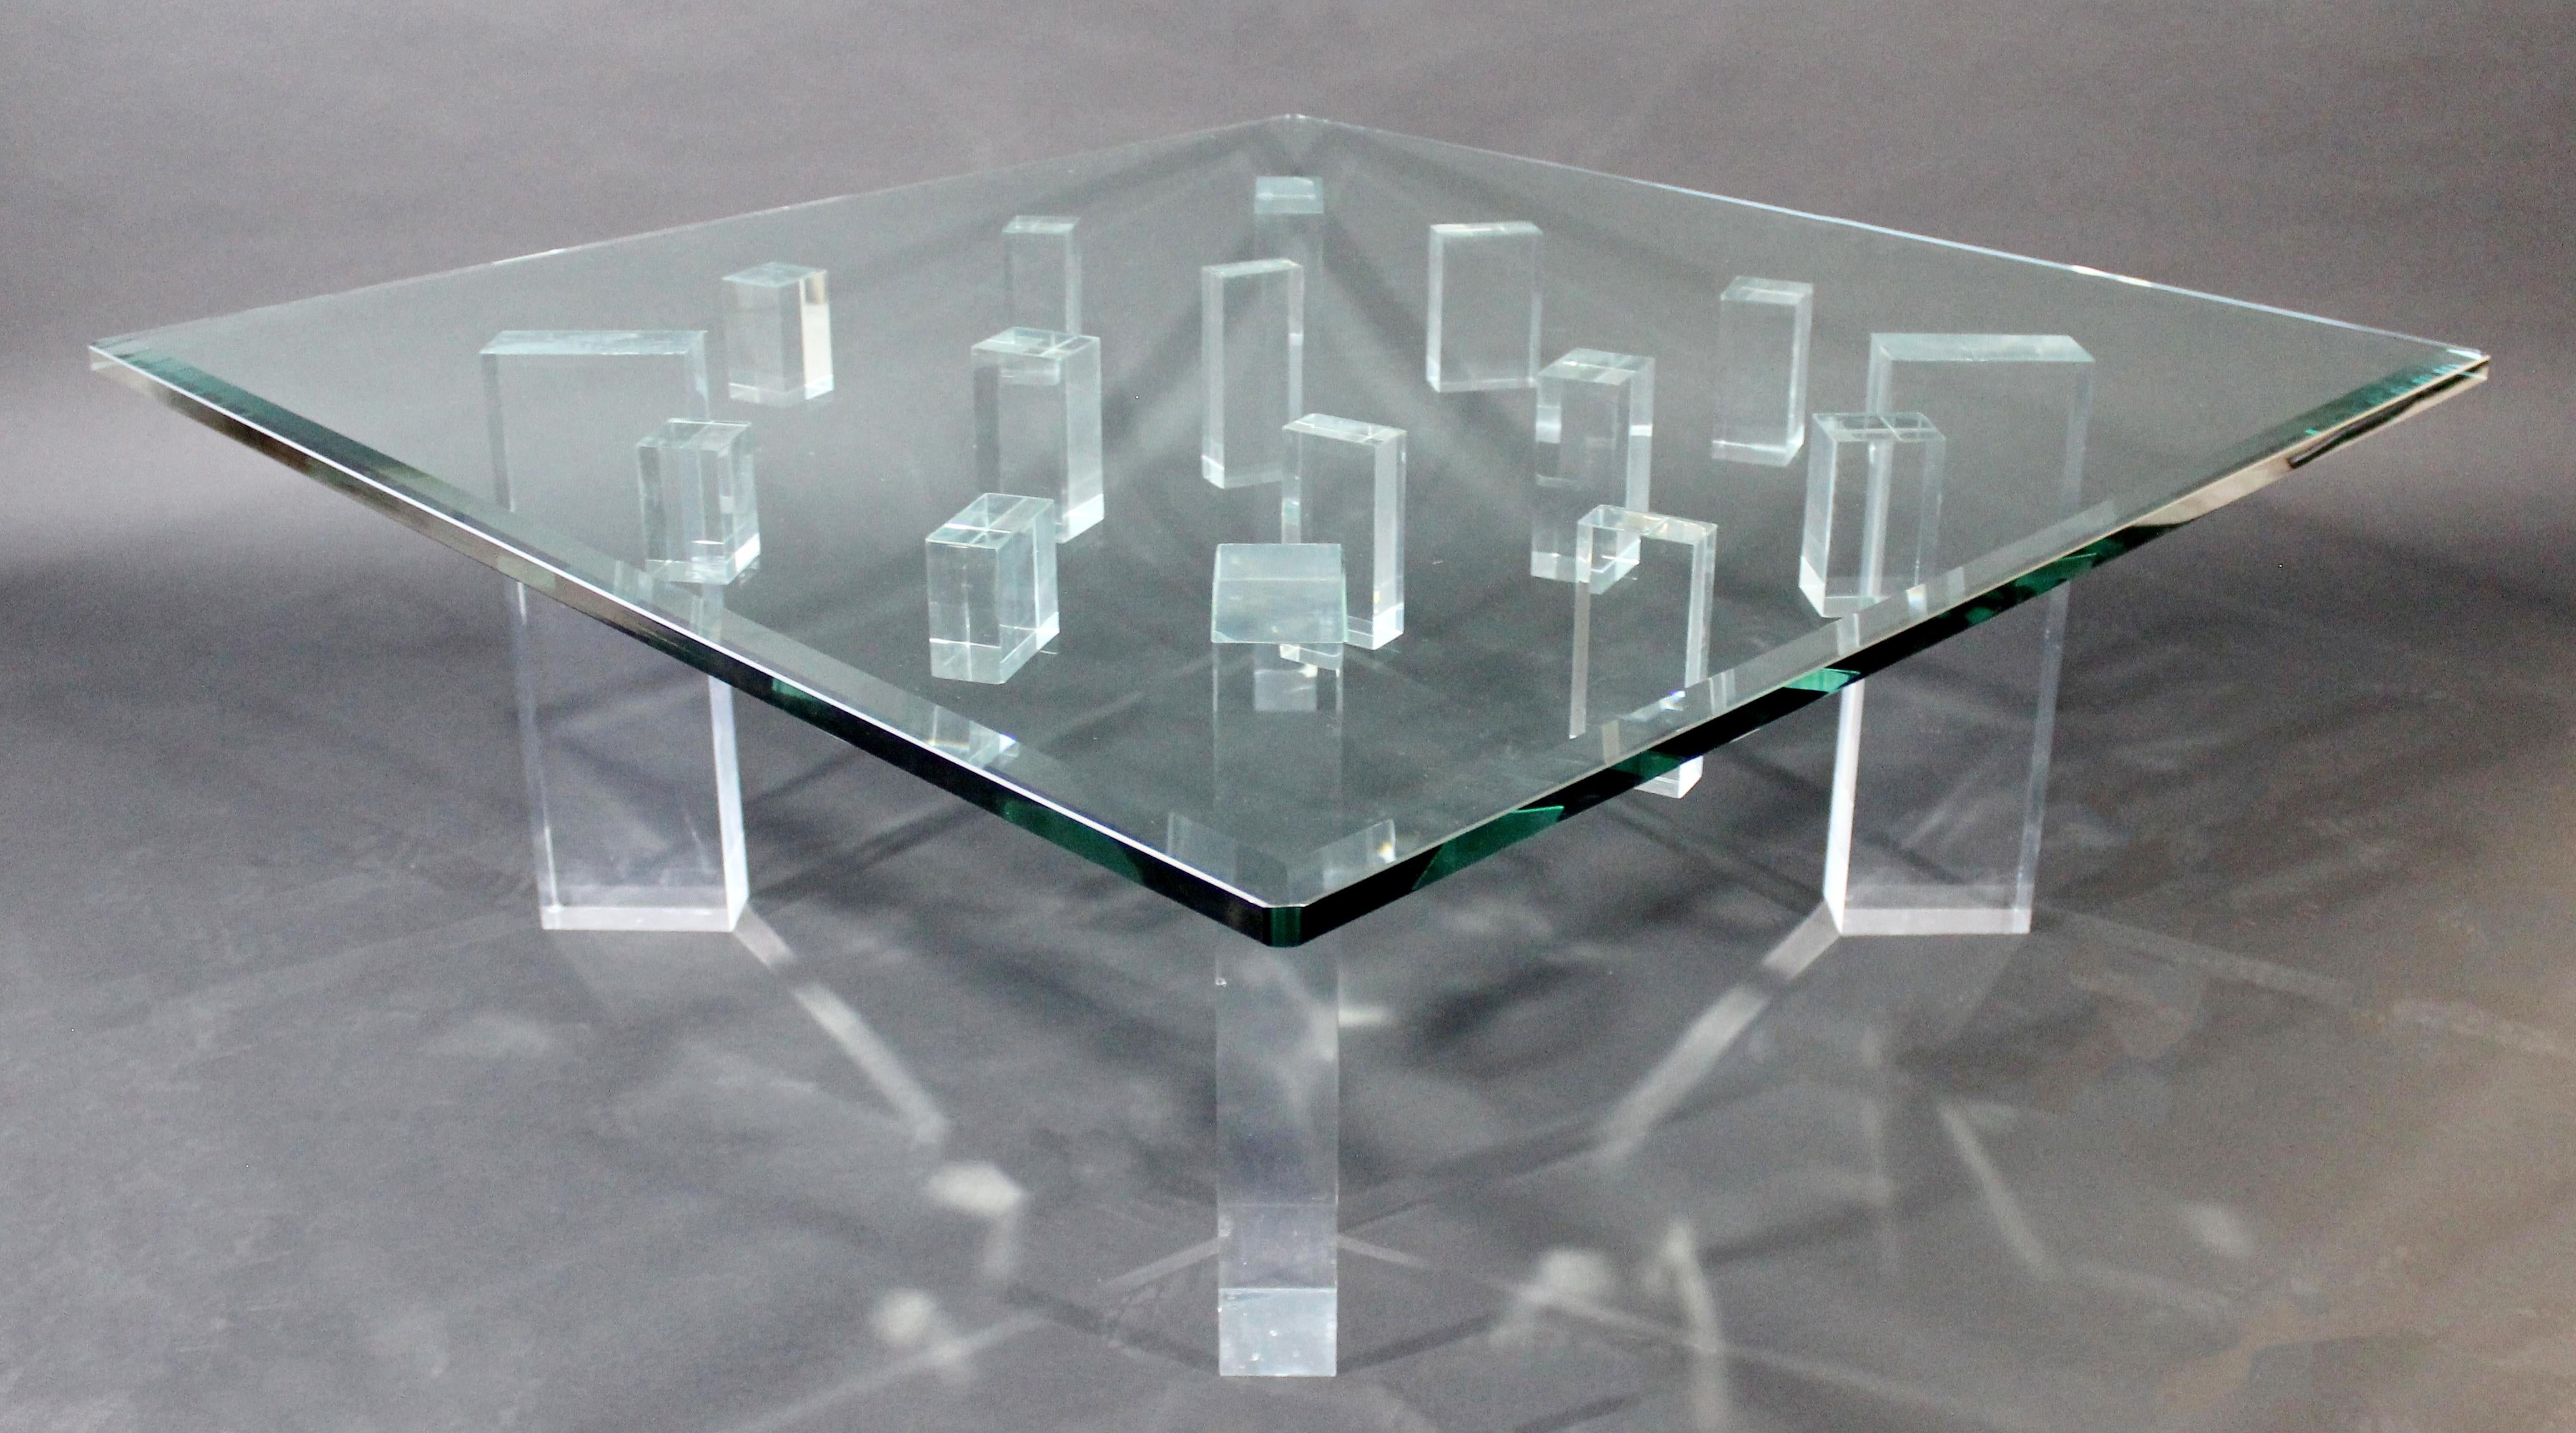 Late 20th Century Contemporary Modern Square Glass Lucite Coffee Table 1980s Hollis Jones Era